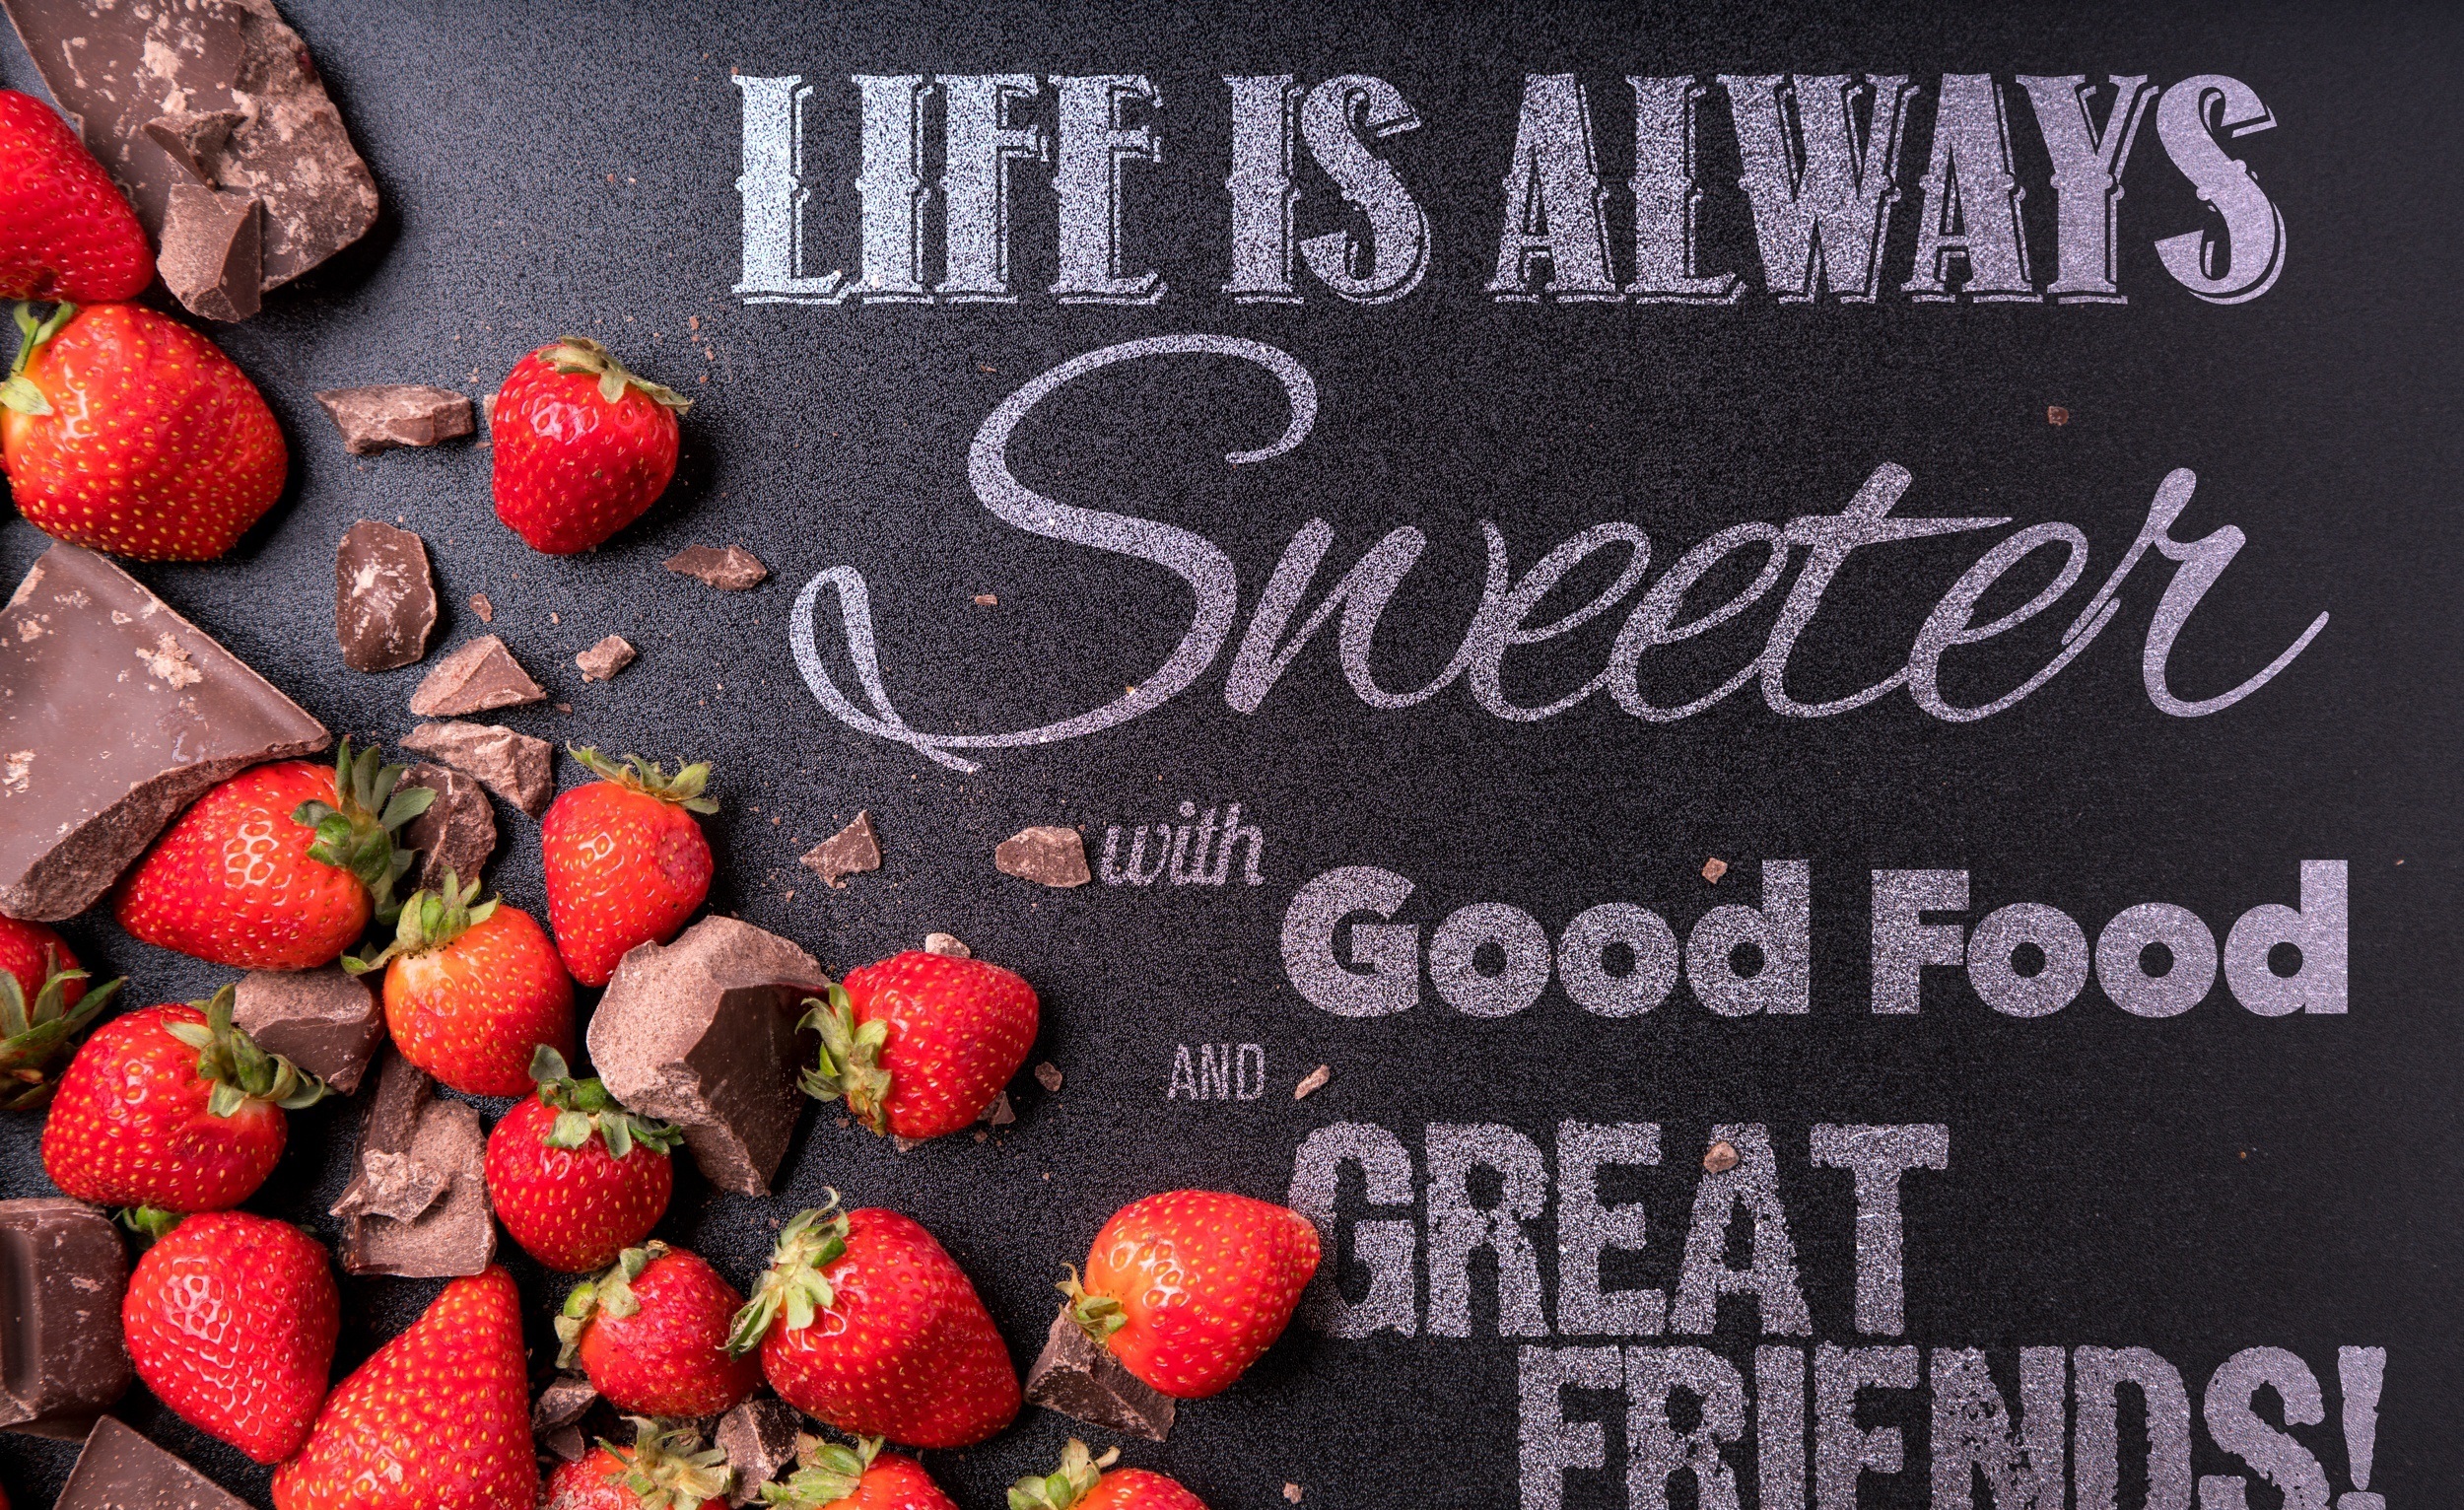 Wallpapers inscription berries strawberries on the desktop